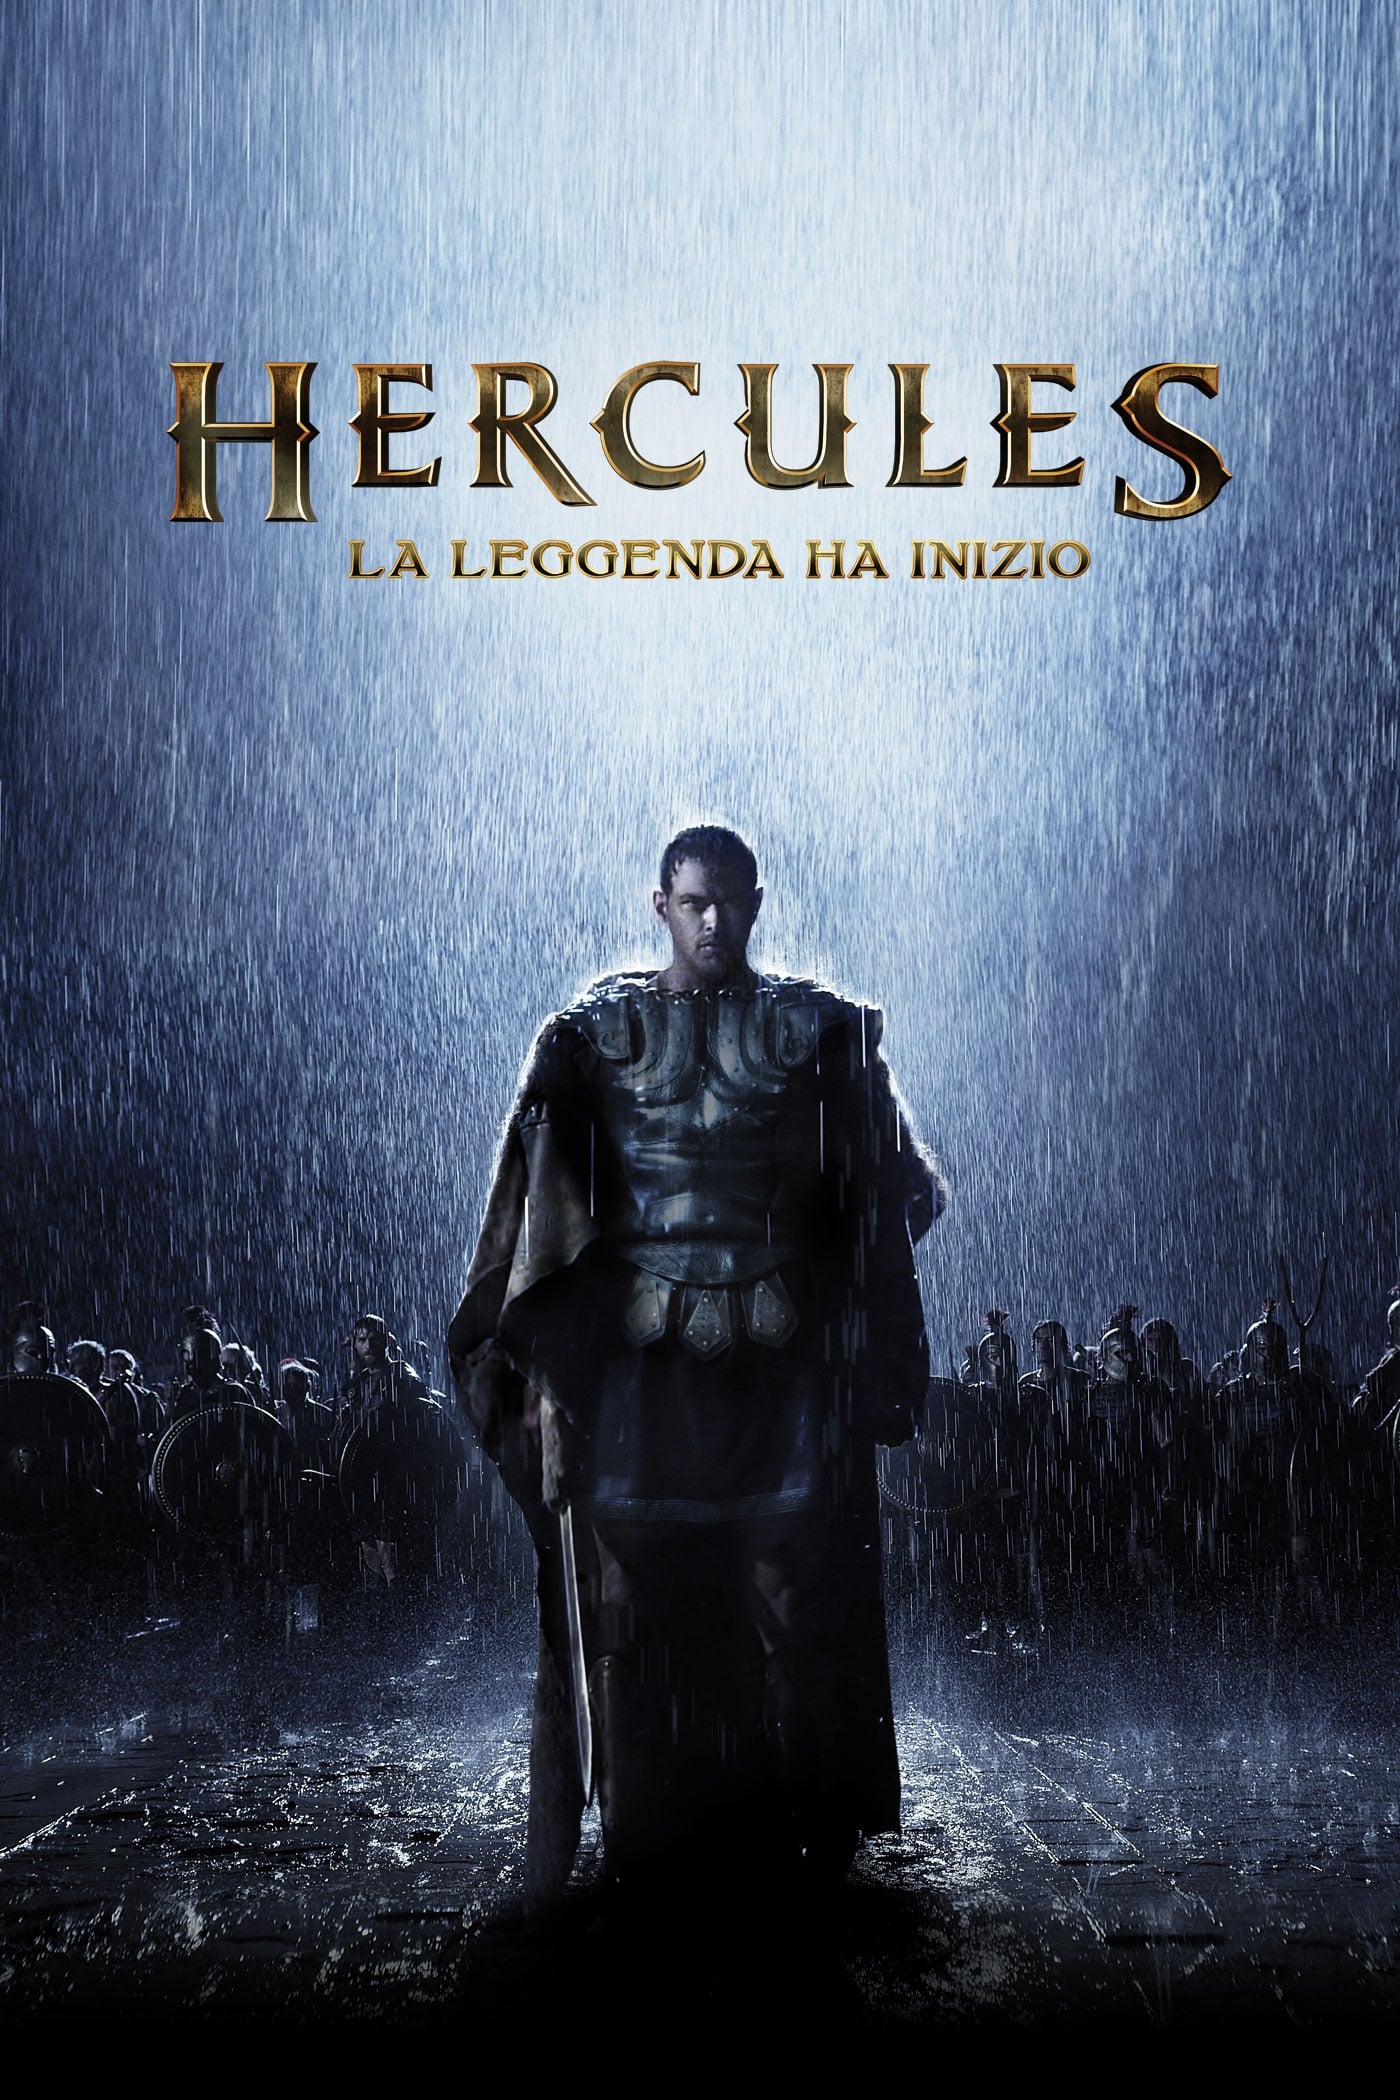 The Legend of Hercules